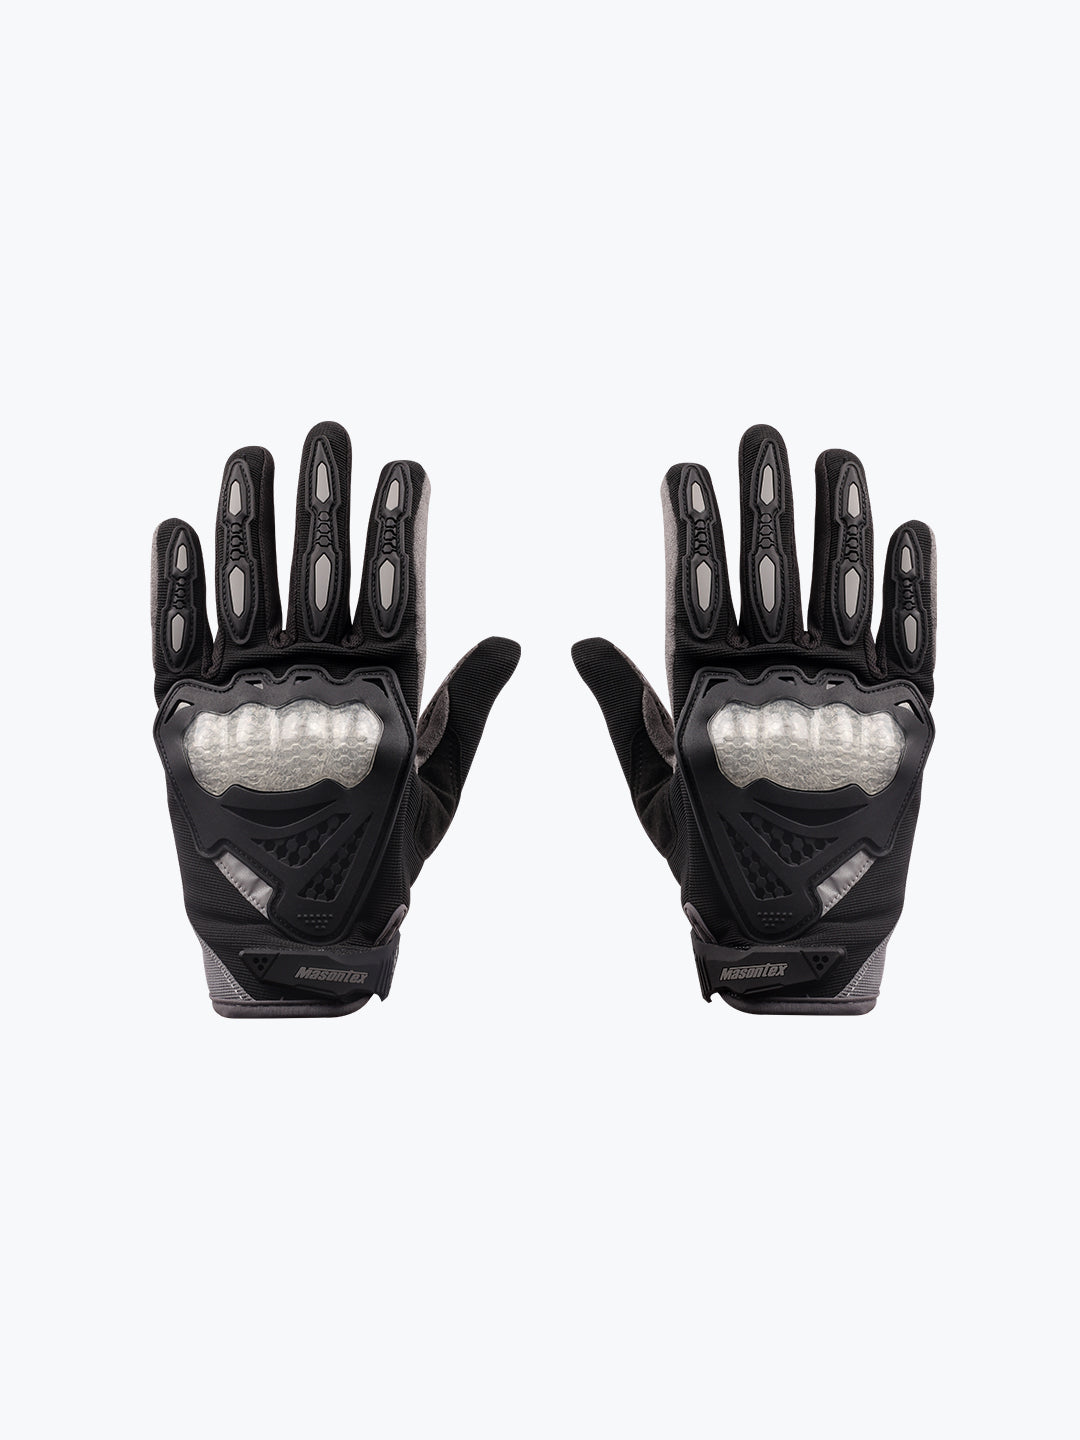 Masontex Full Gloves Black M35